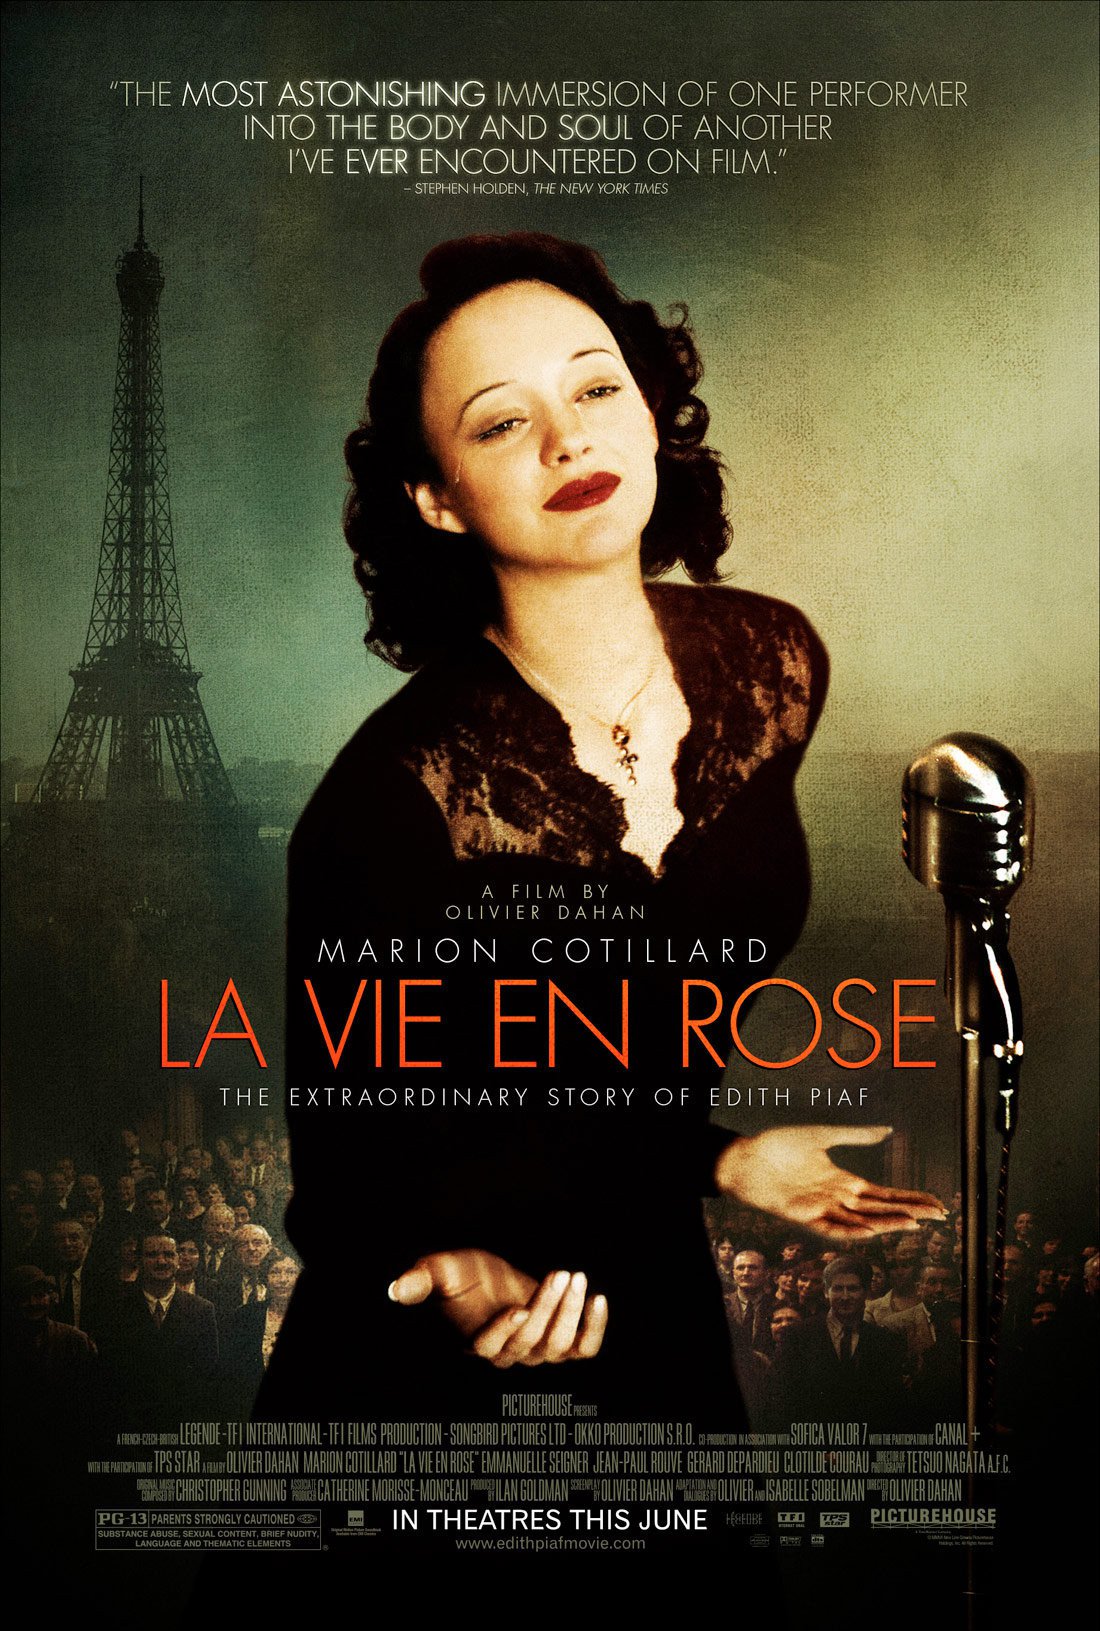 Poster for the movie "La Vie en Rose"